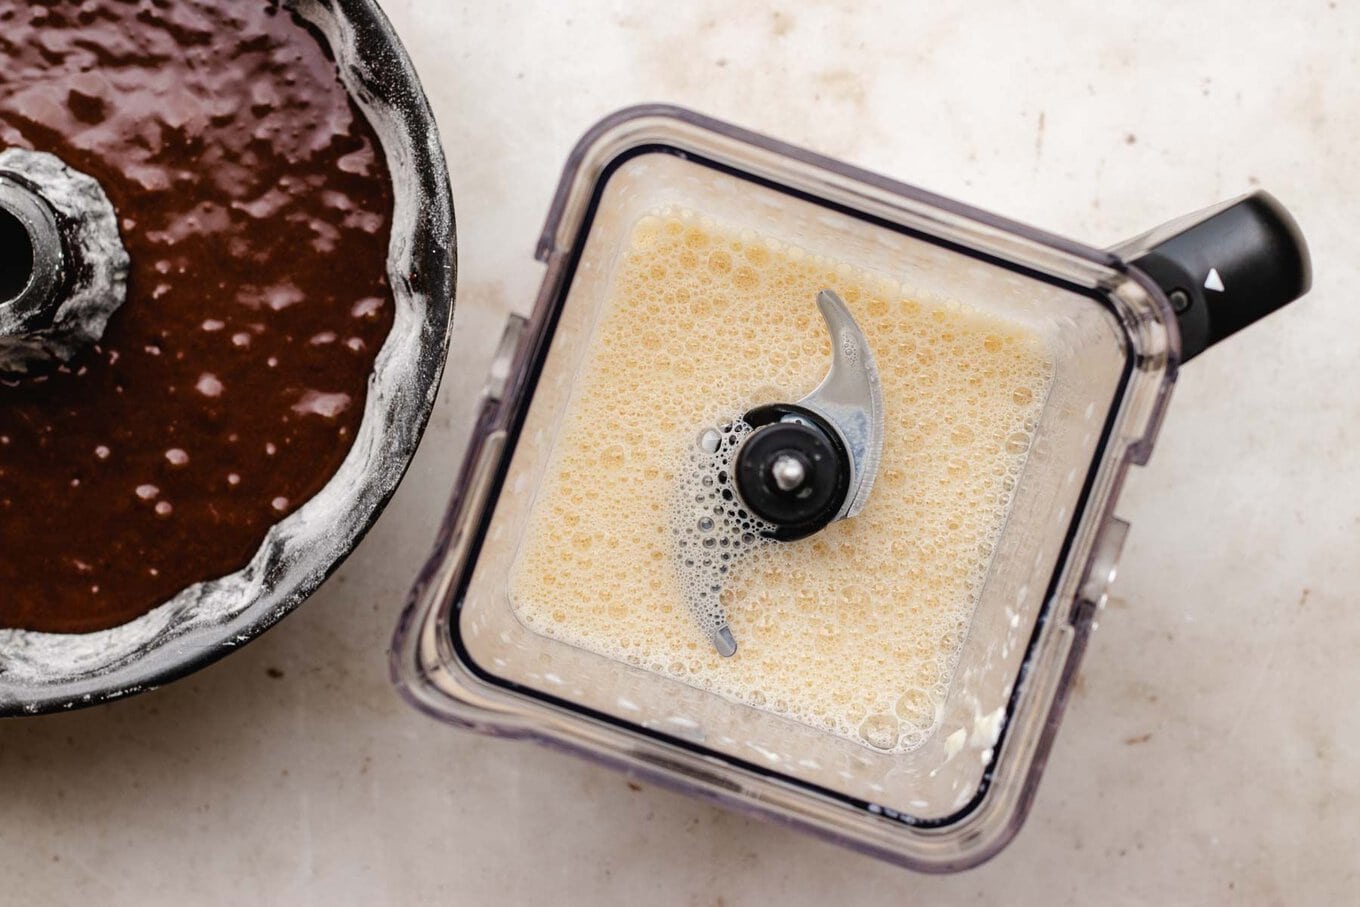 Chocoflan blender with blended flan batter next to Bundt pan with cake batter, horizontal photo